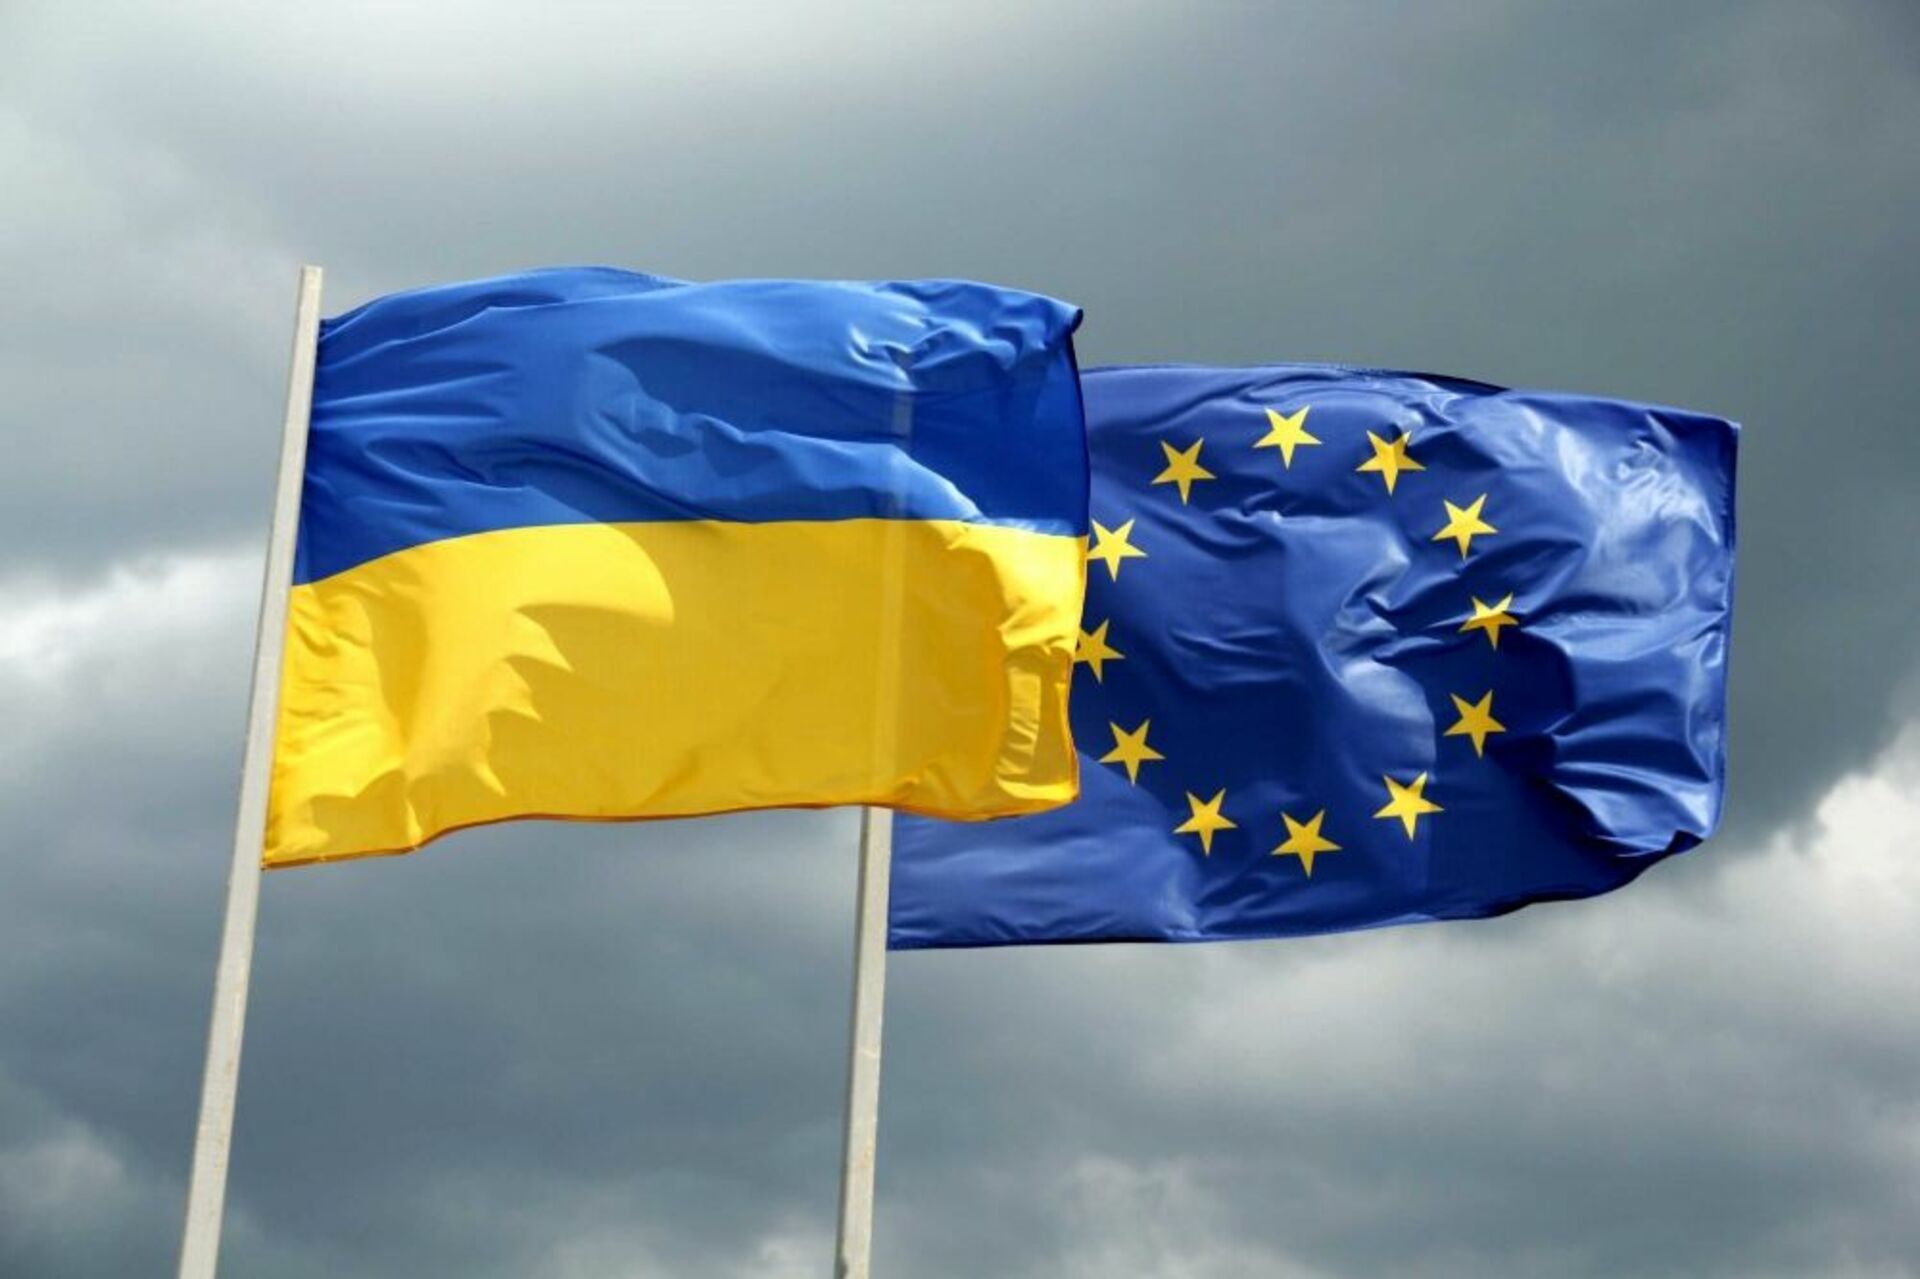 Украина принята в евросоюз. Украина и Европейский Союз. Флаг Украины и ЕС. Флаг Украины и Евросоюза. Украина Европа флаг.